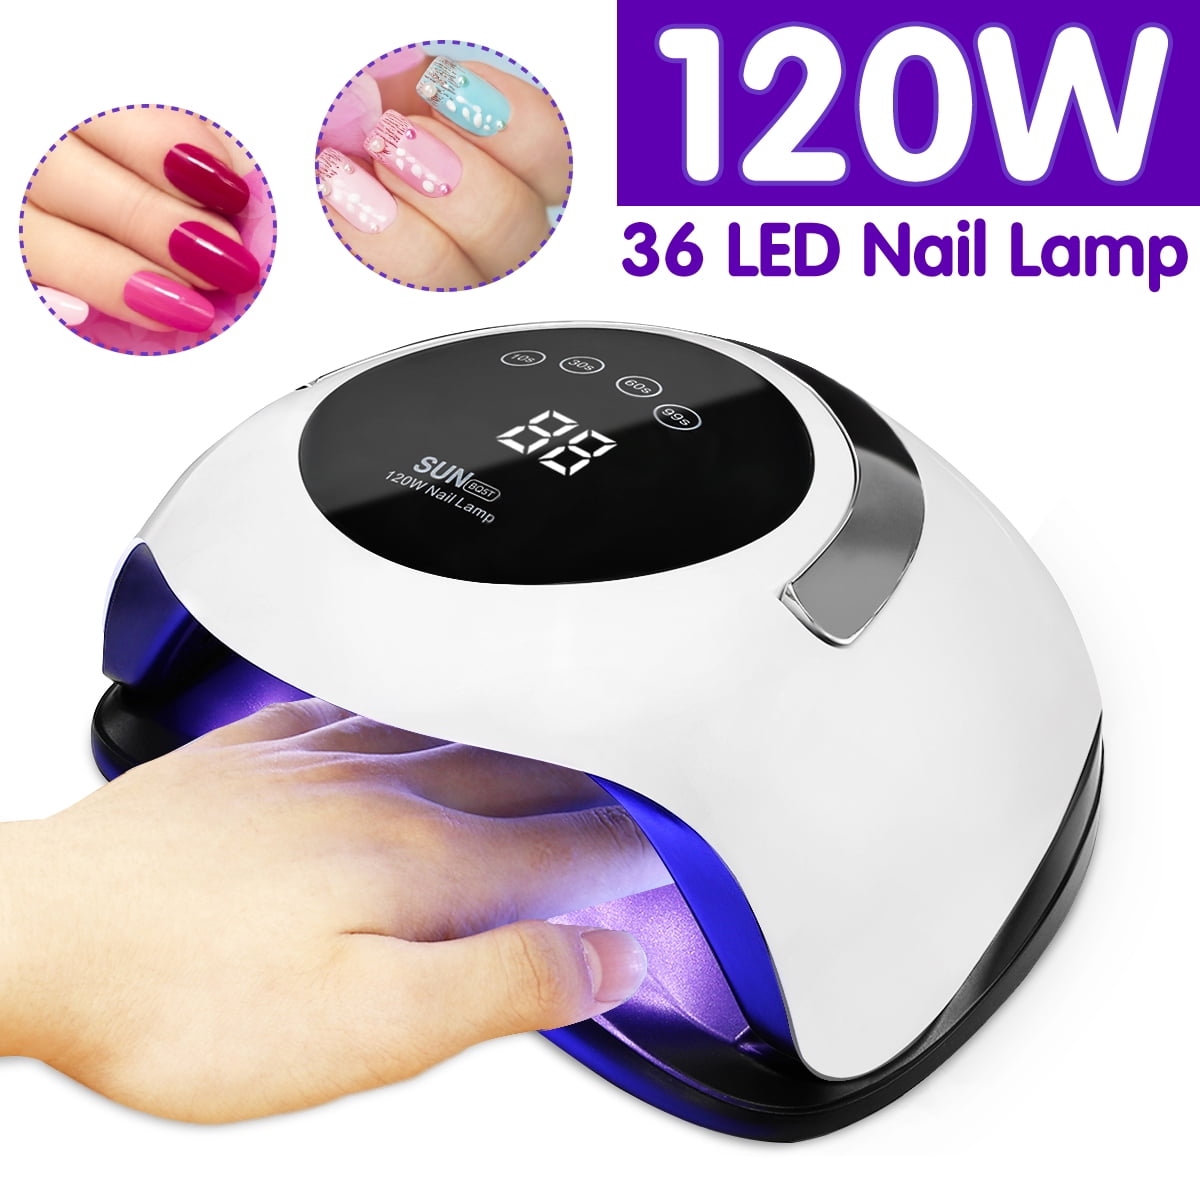 120W 36 LED UV Nail Polish Dryer Lamp Gel Polish Curing Lamp with 4